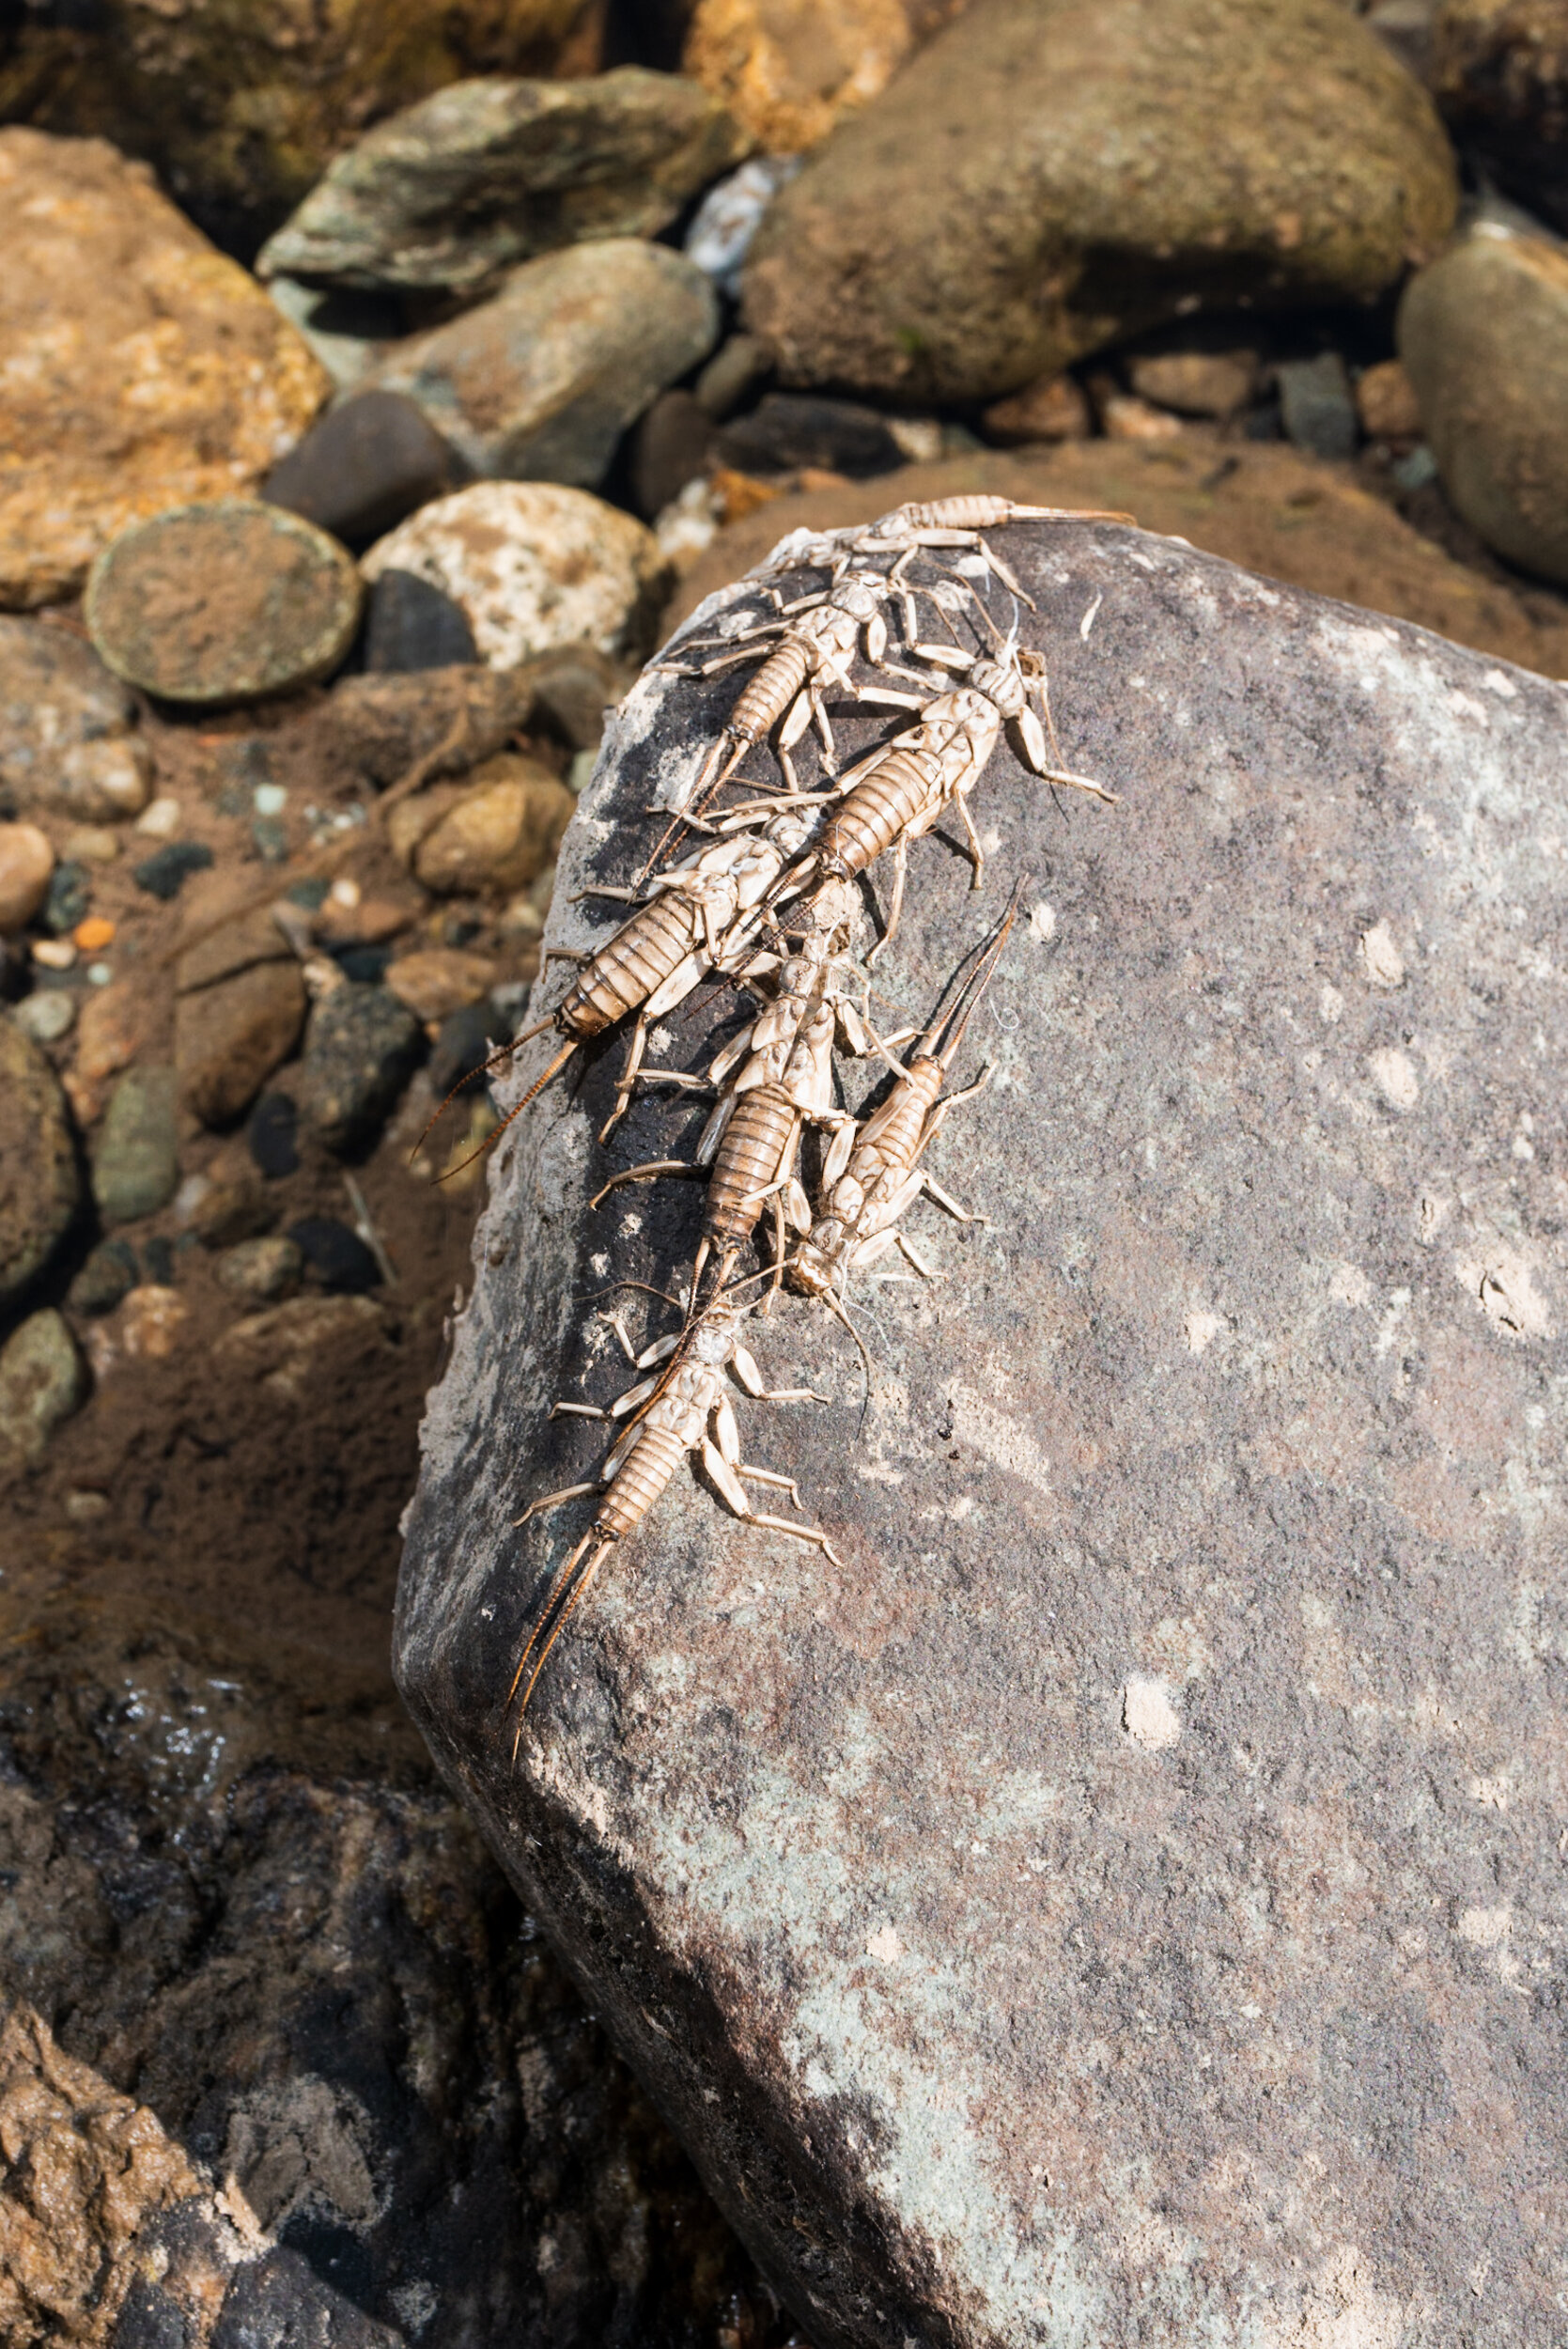 Dragonfly larvae on rock